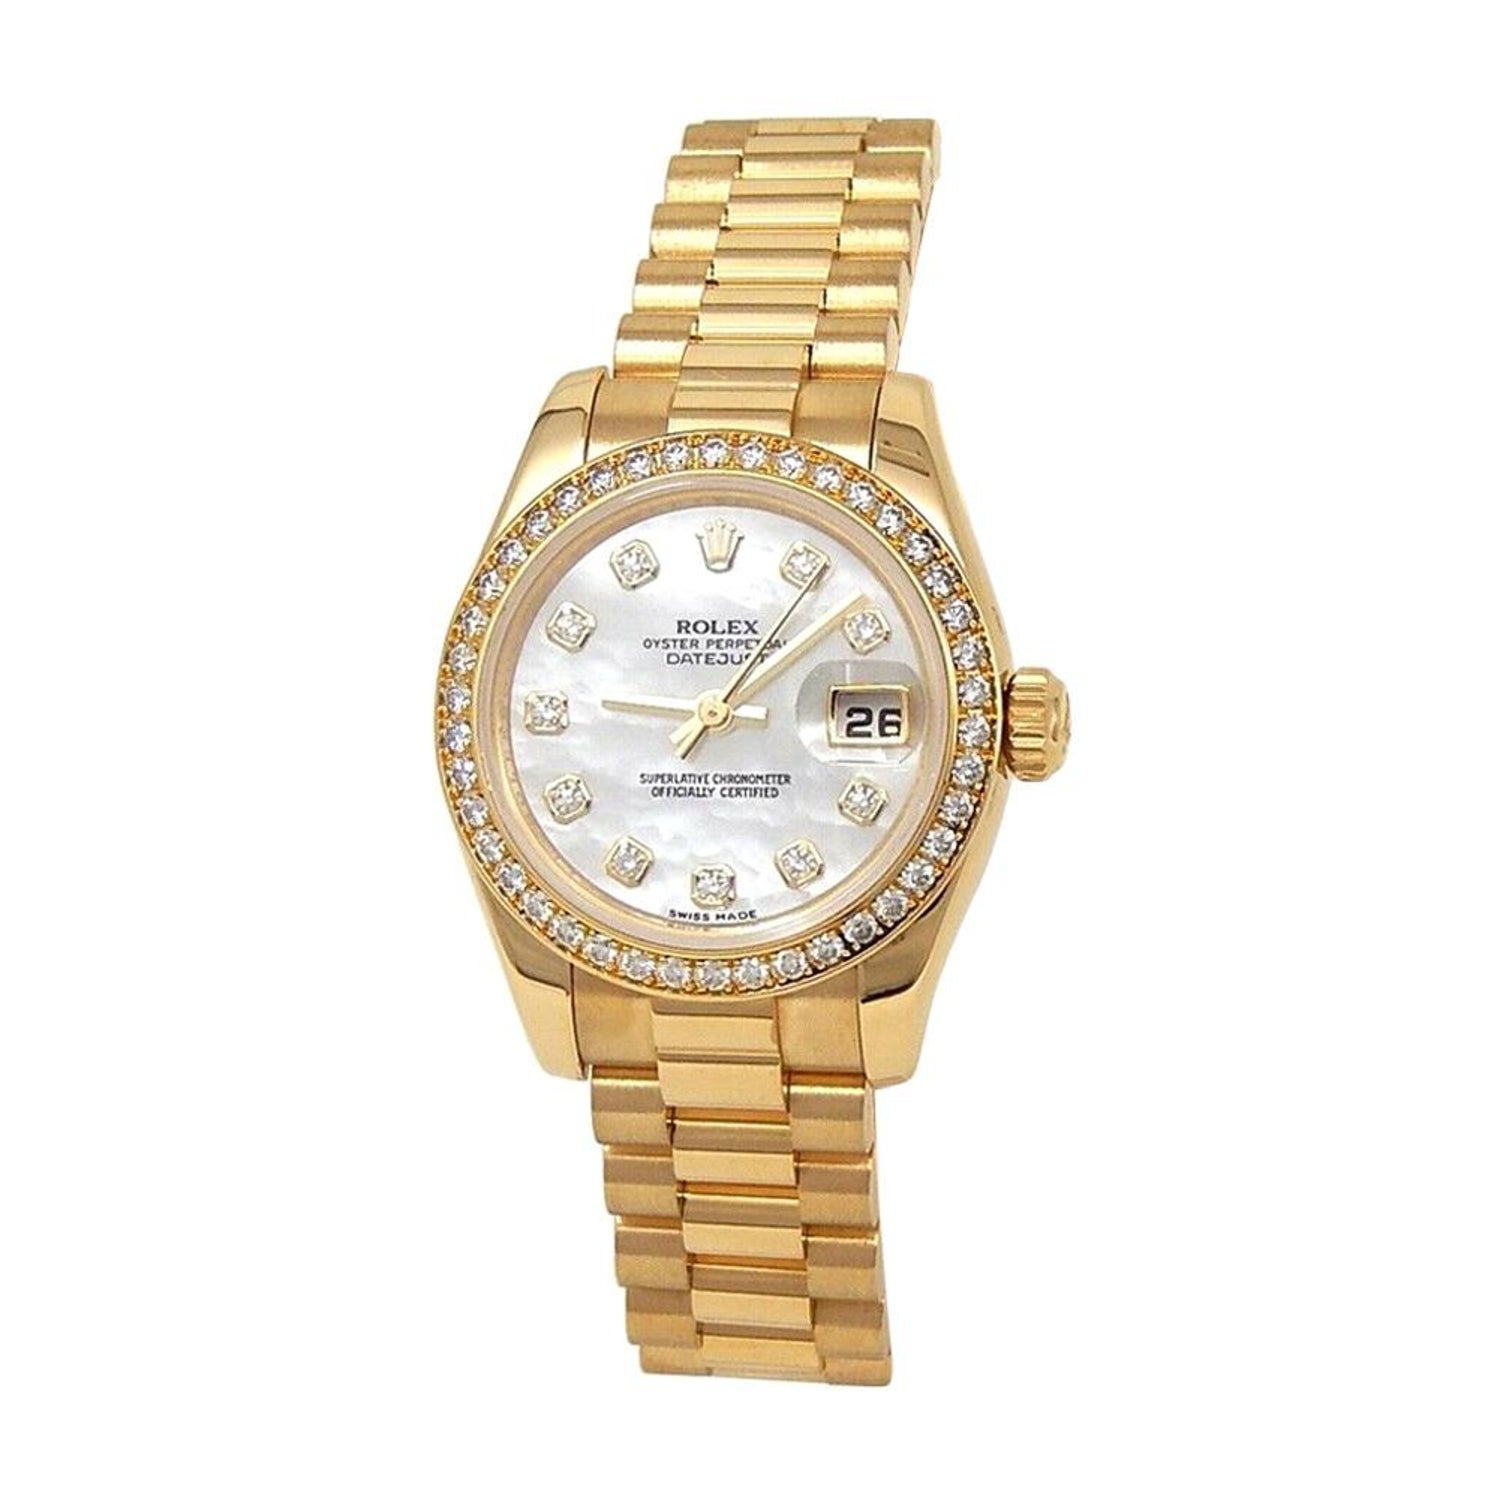 24 Karat Gold Rolex Watch - For Sale on 1stDibs | 750 pj9, 24 karat rolex, rolex  pj9